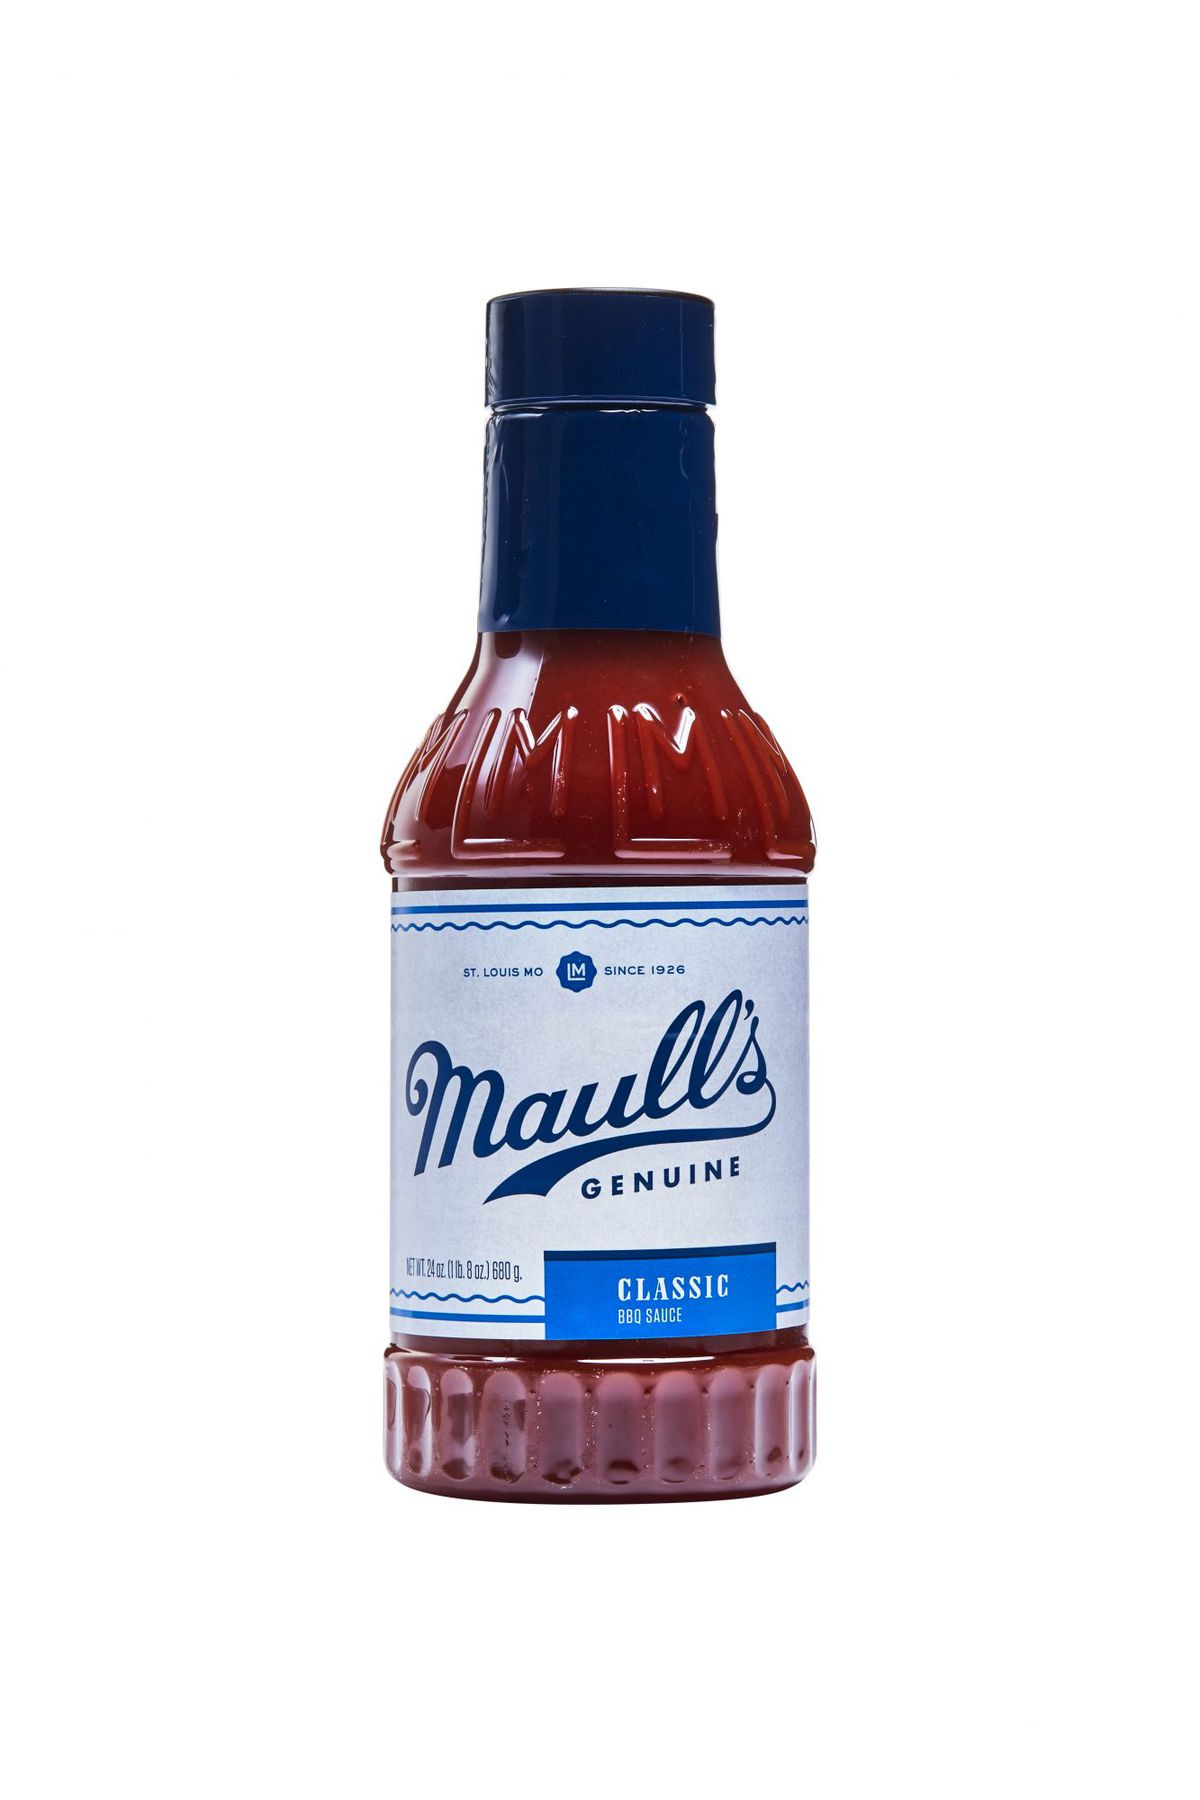 Maull’s Genuine Classic BBQ Sauce